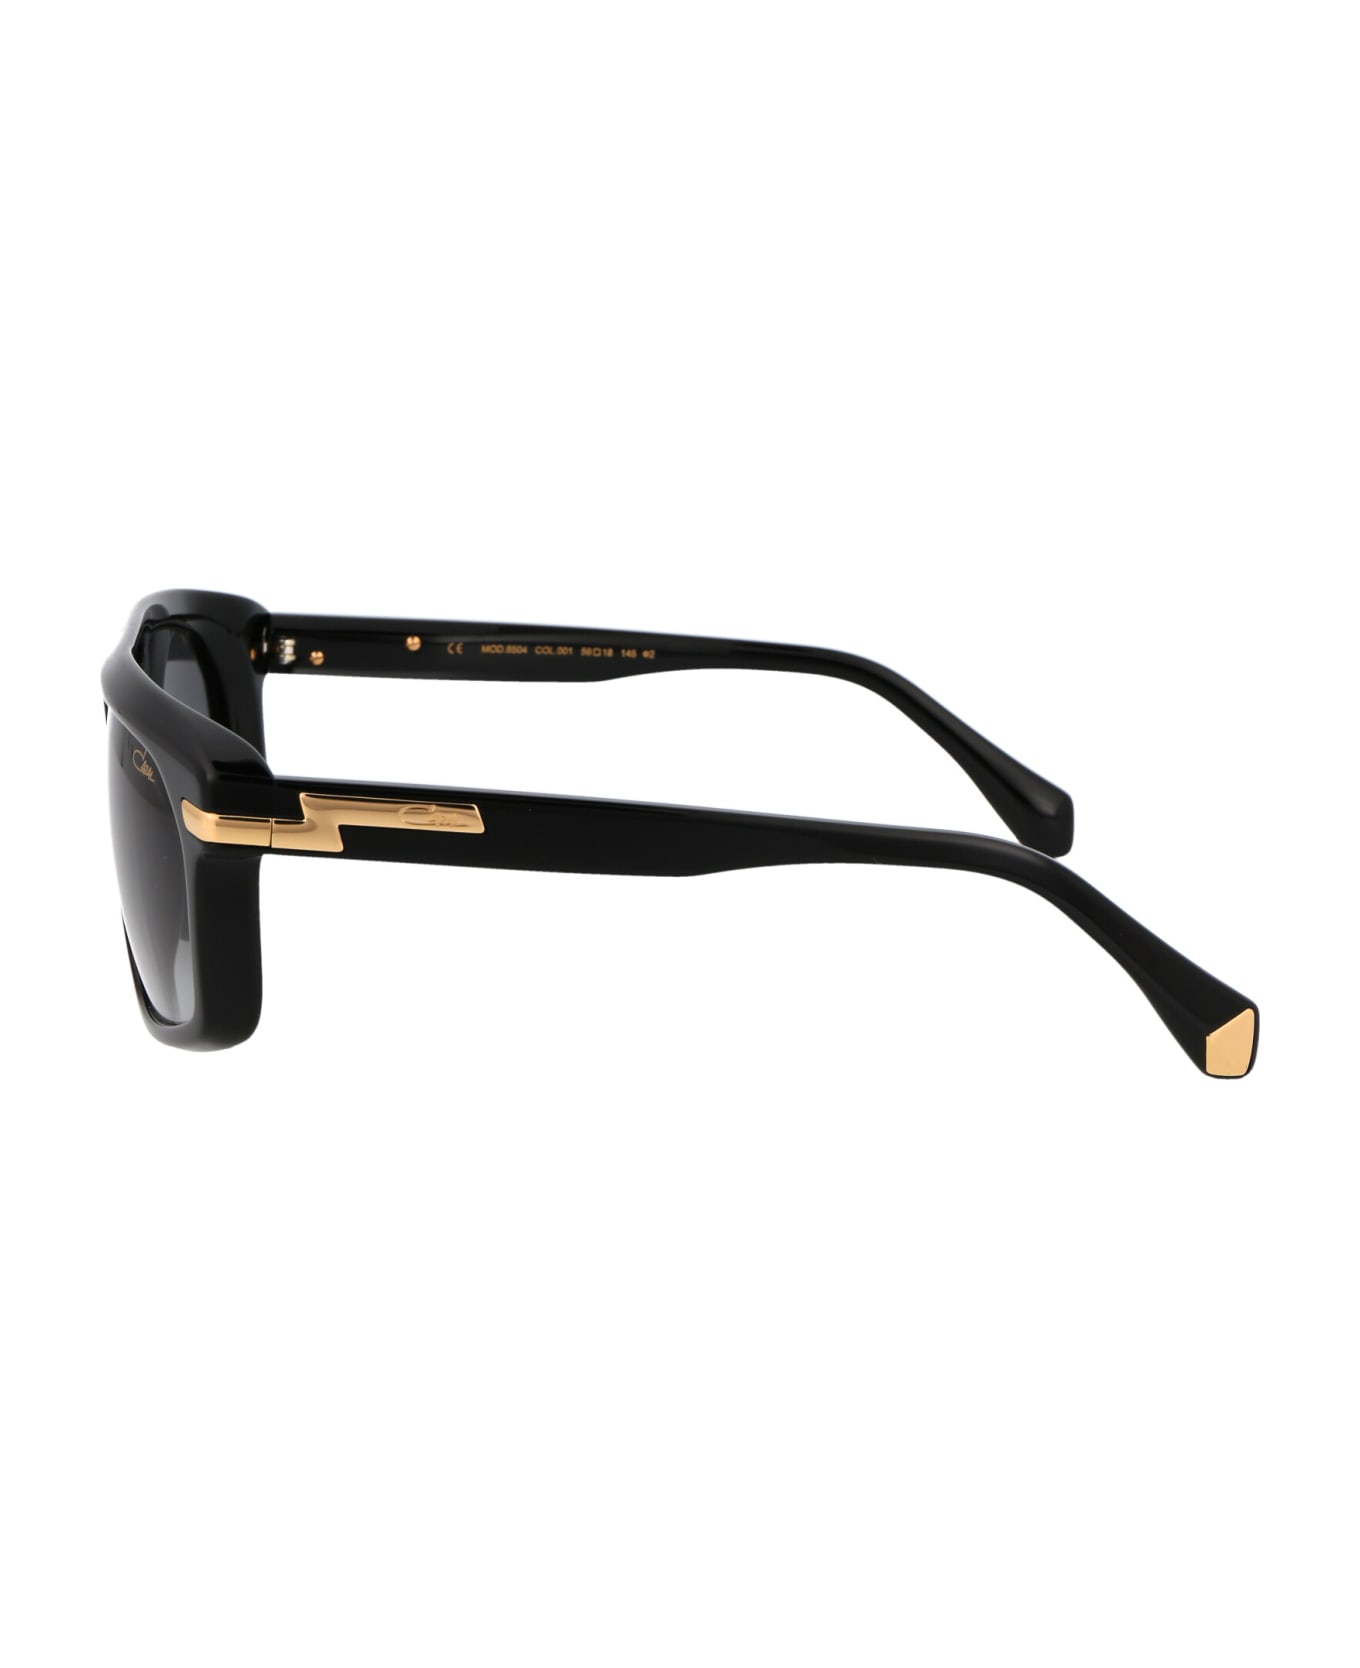 Cazal Mod. 8504 Sunglasses - 001 BLACK